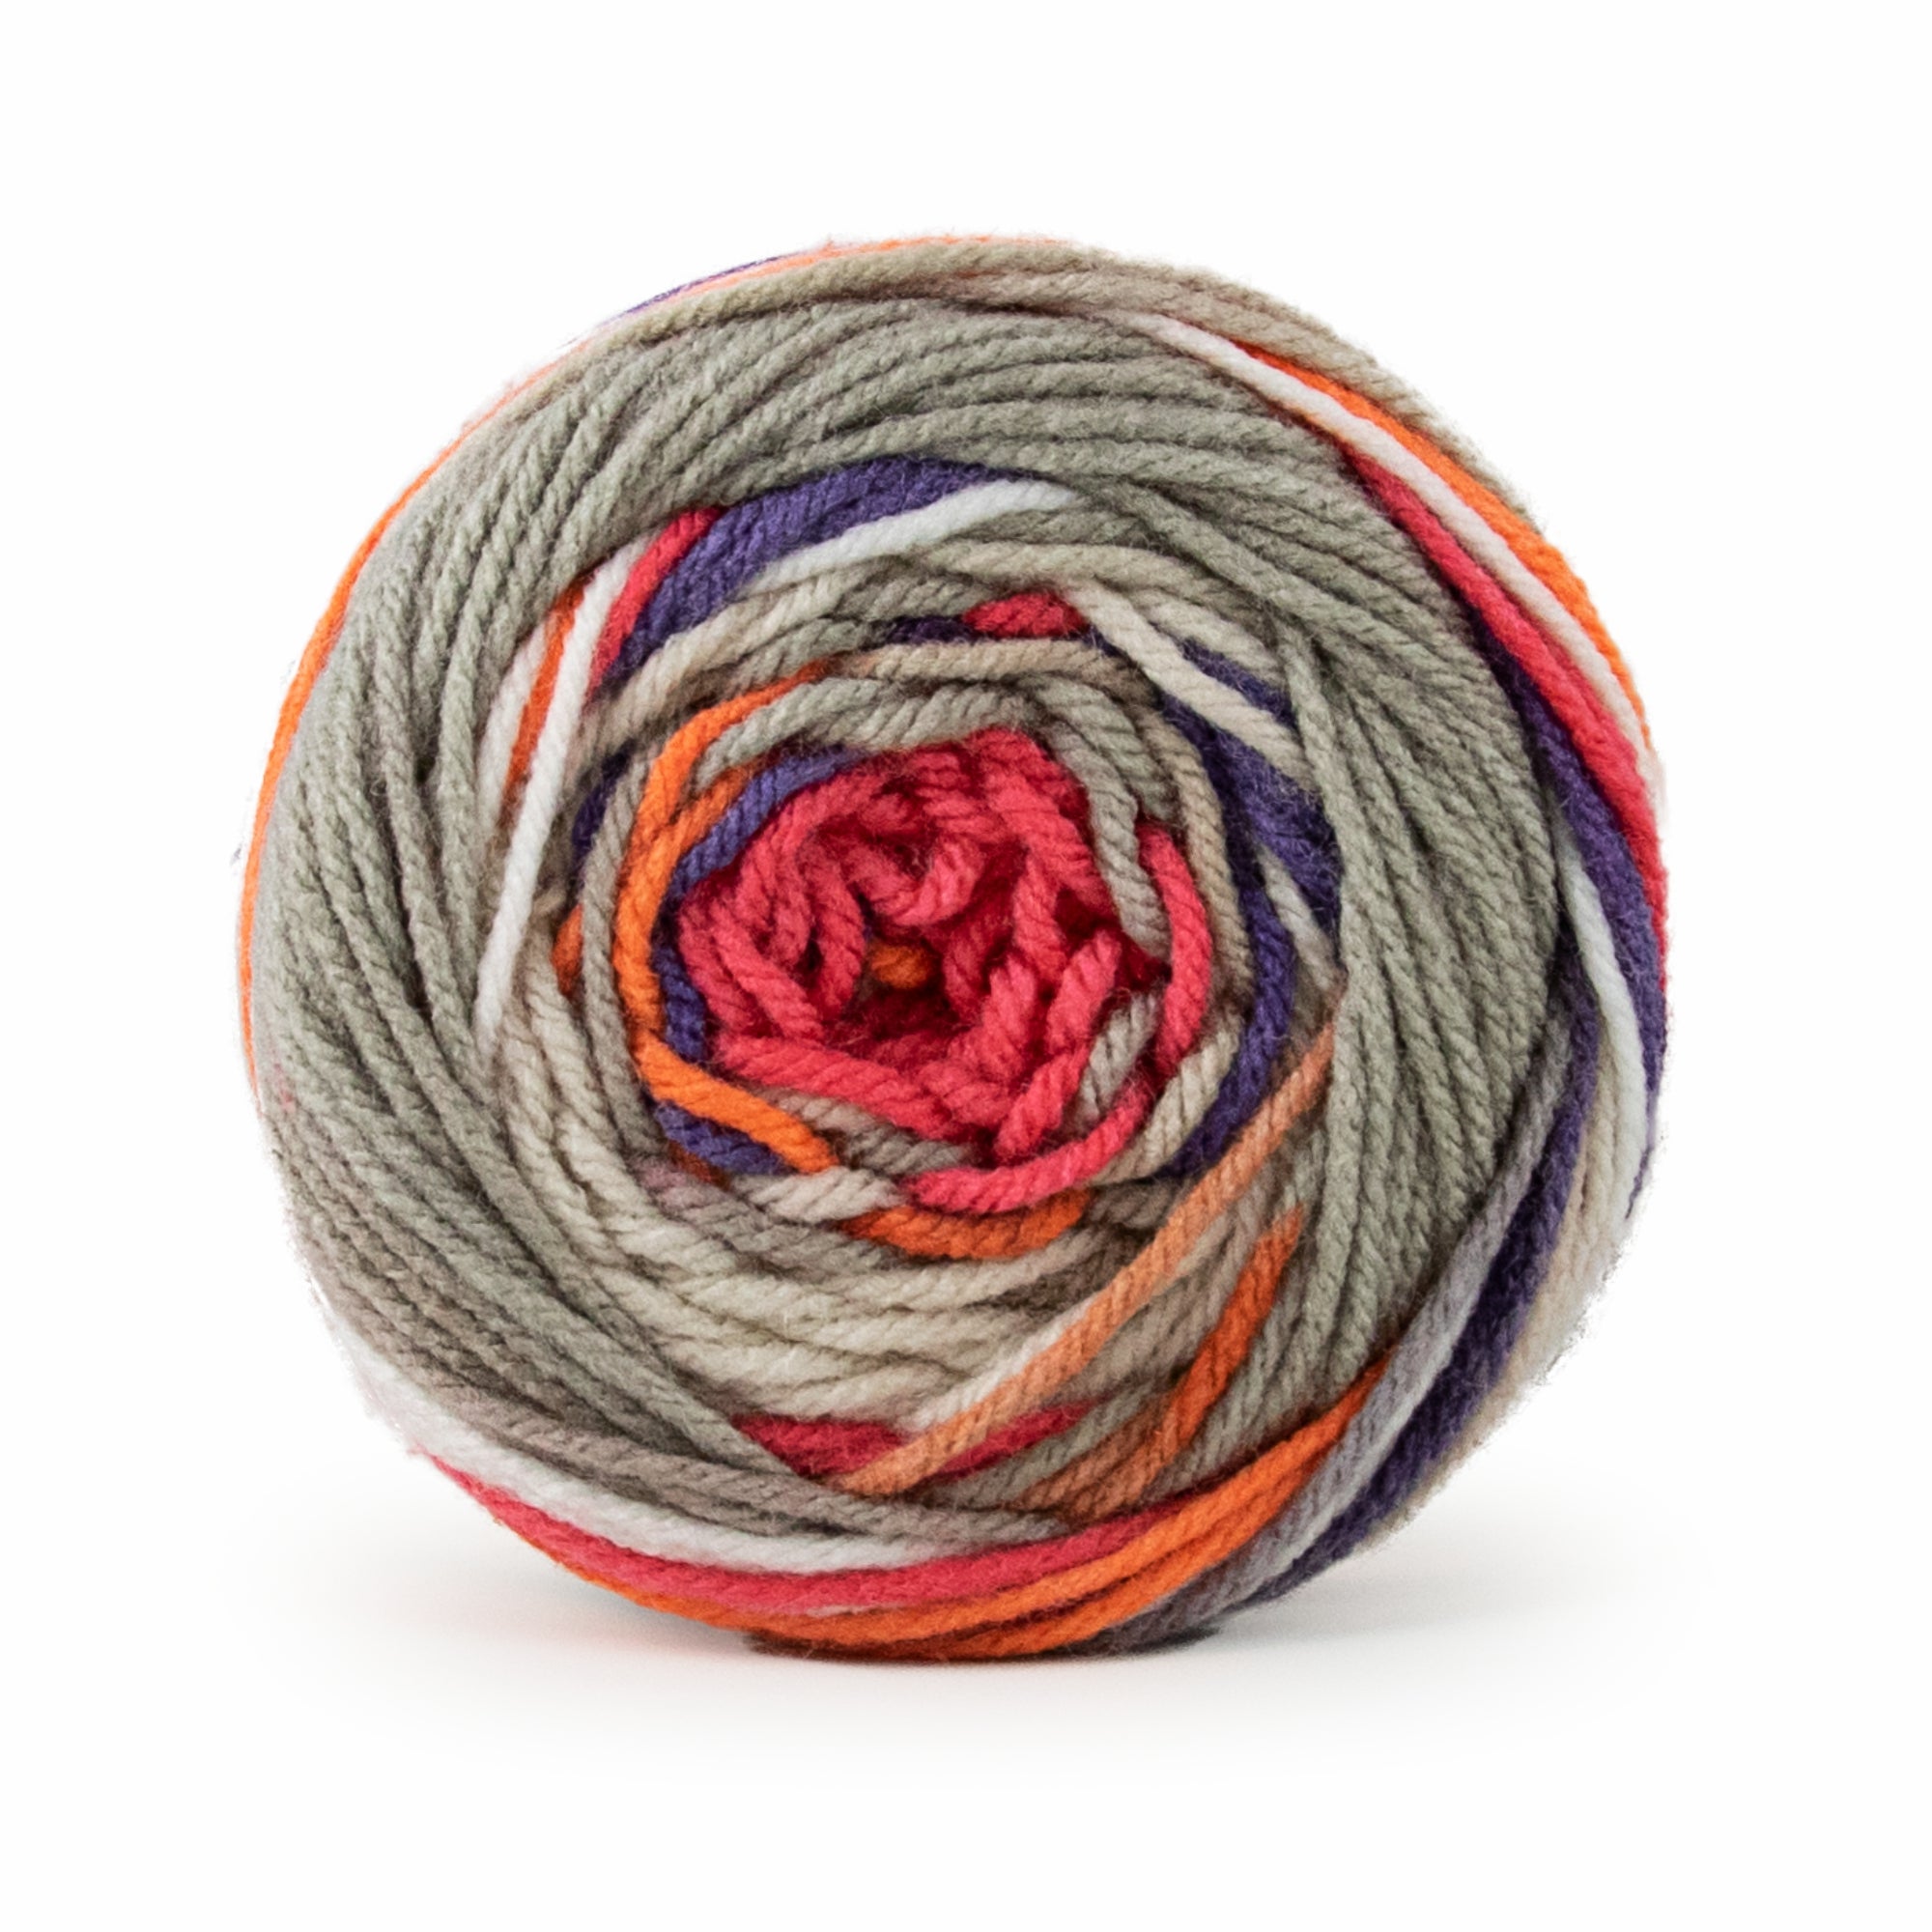 Ganga Desire Hand Knitting and Crochet yarn (Grey) (200gms) - Desire Hand  Knitting and Crochet yarn (Grey) (200gms) . shop for Ganga products in  India.